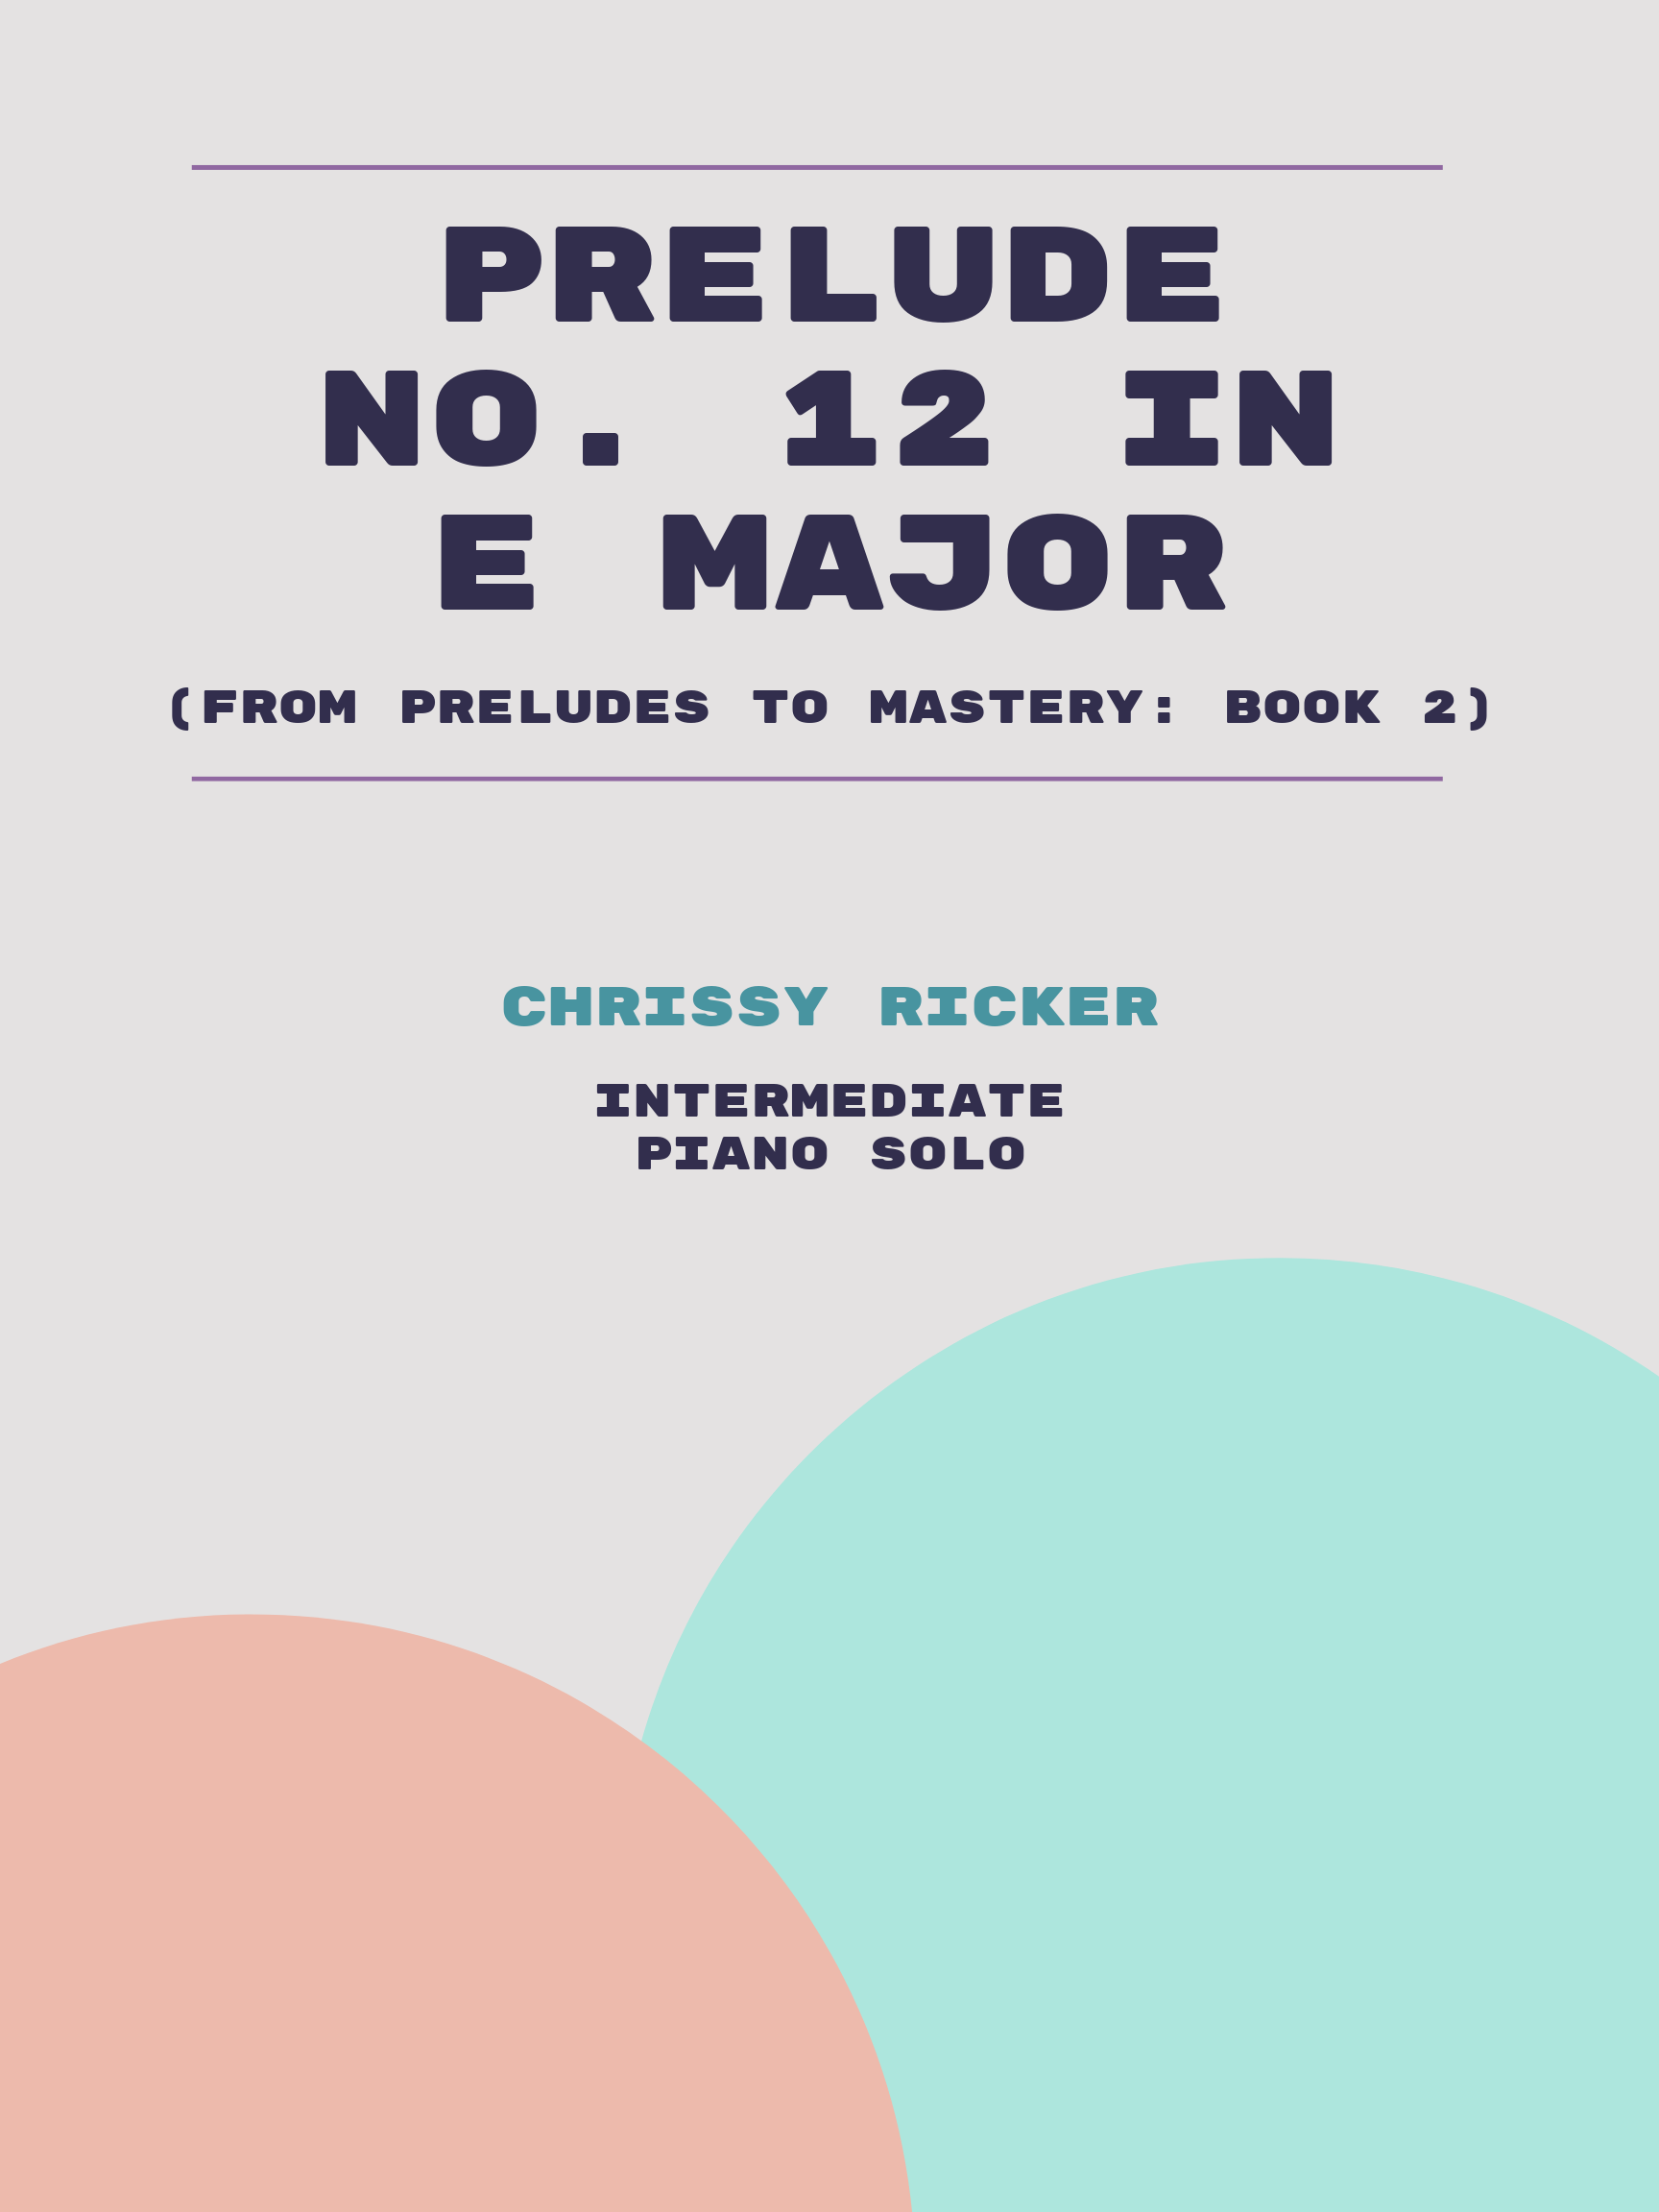 Prelude No. 12 in E major by Chrissy Ricker